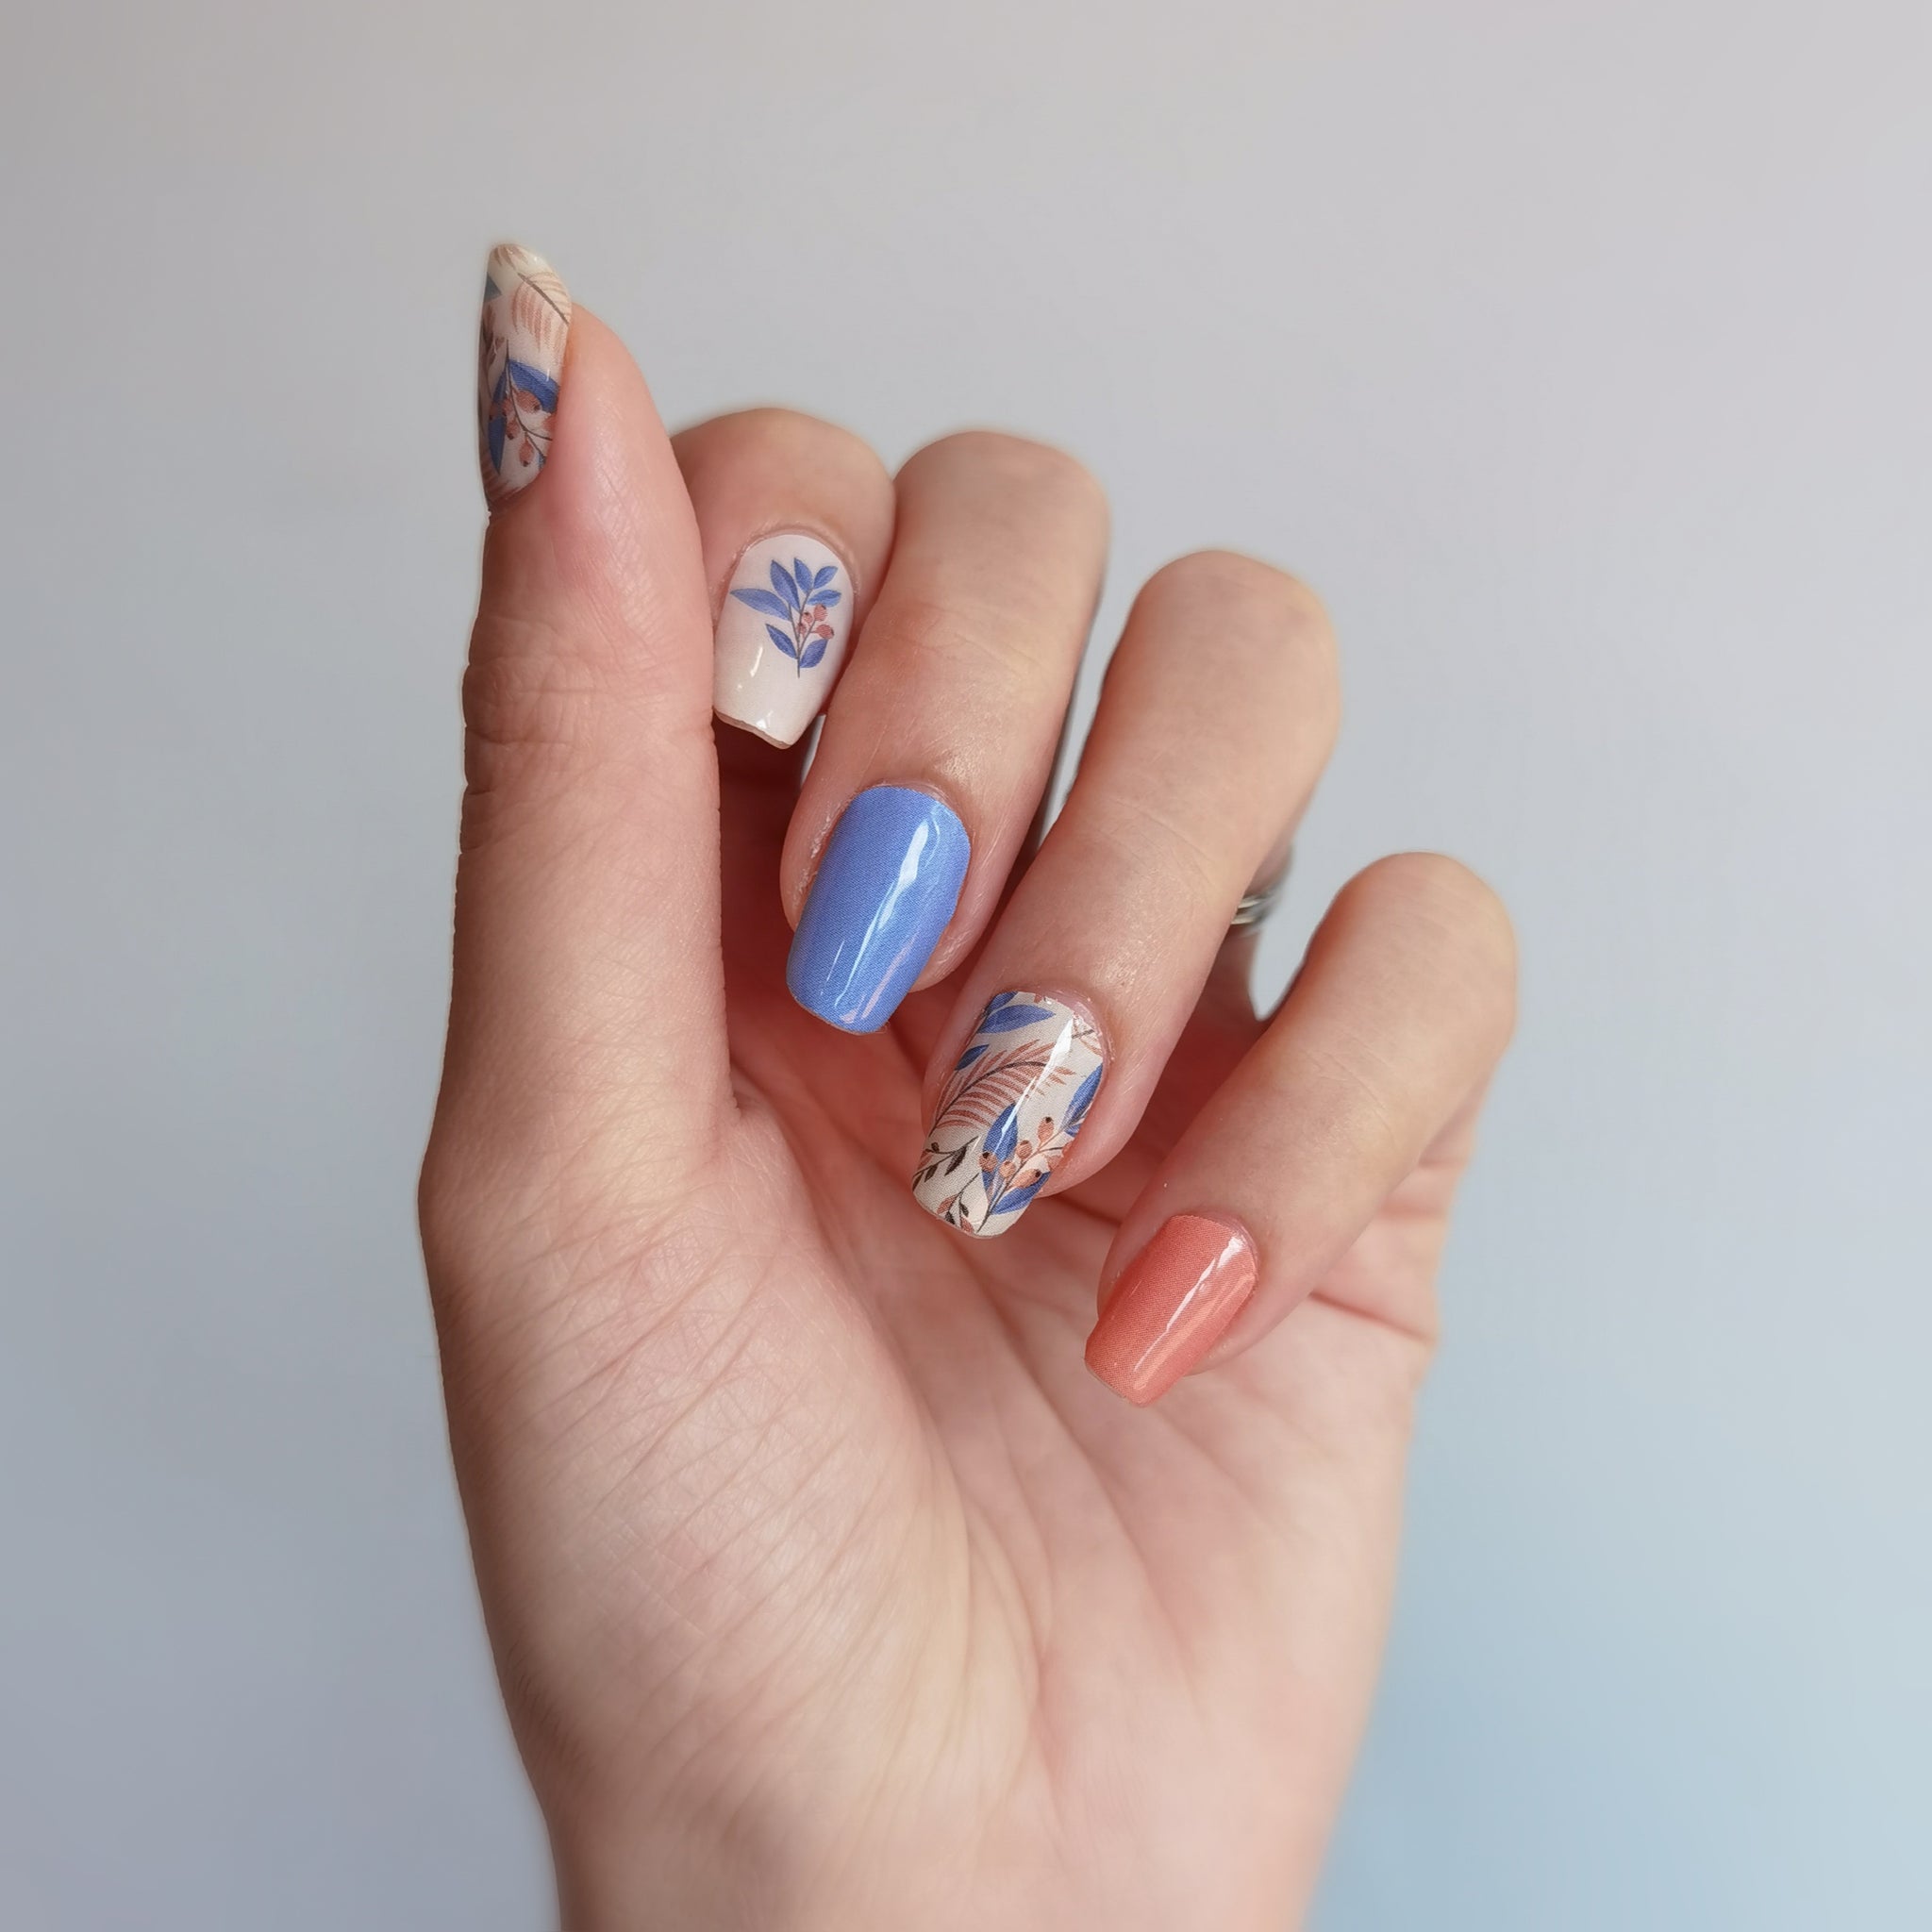 summer-inspired nail designs